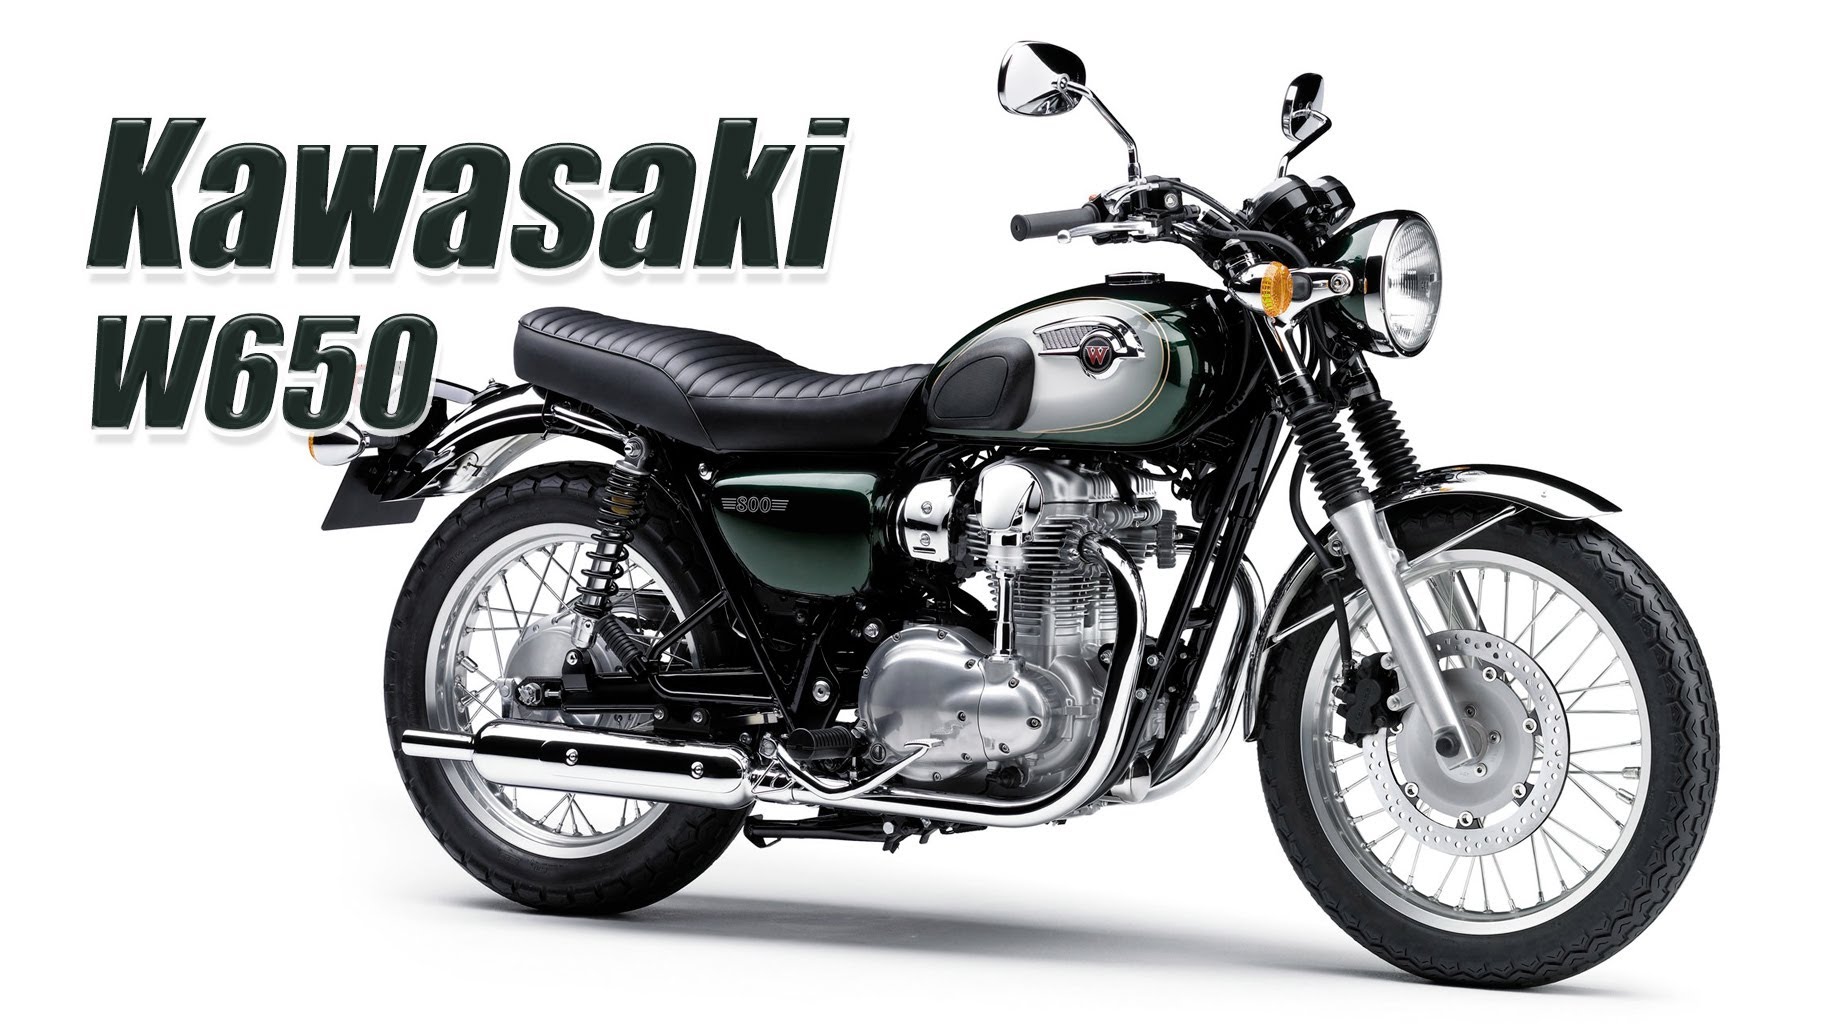 Kawasaki W650 1 Bikes Bestcarmag Com